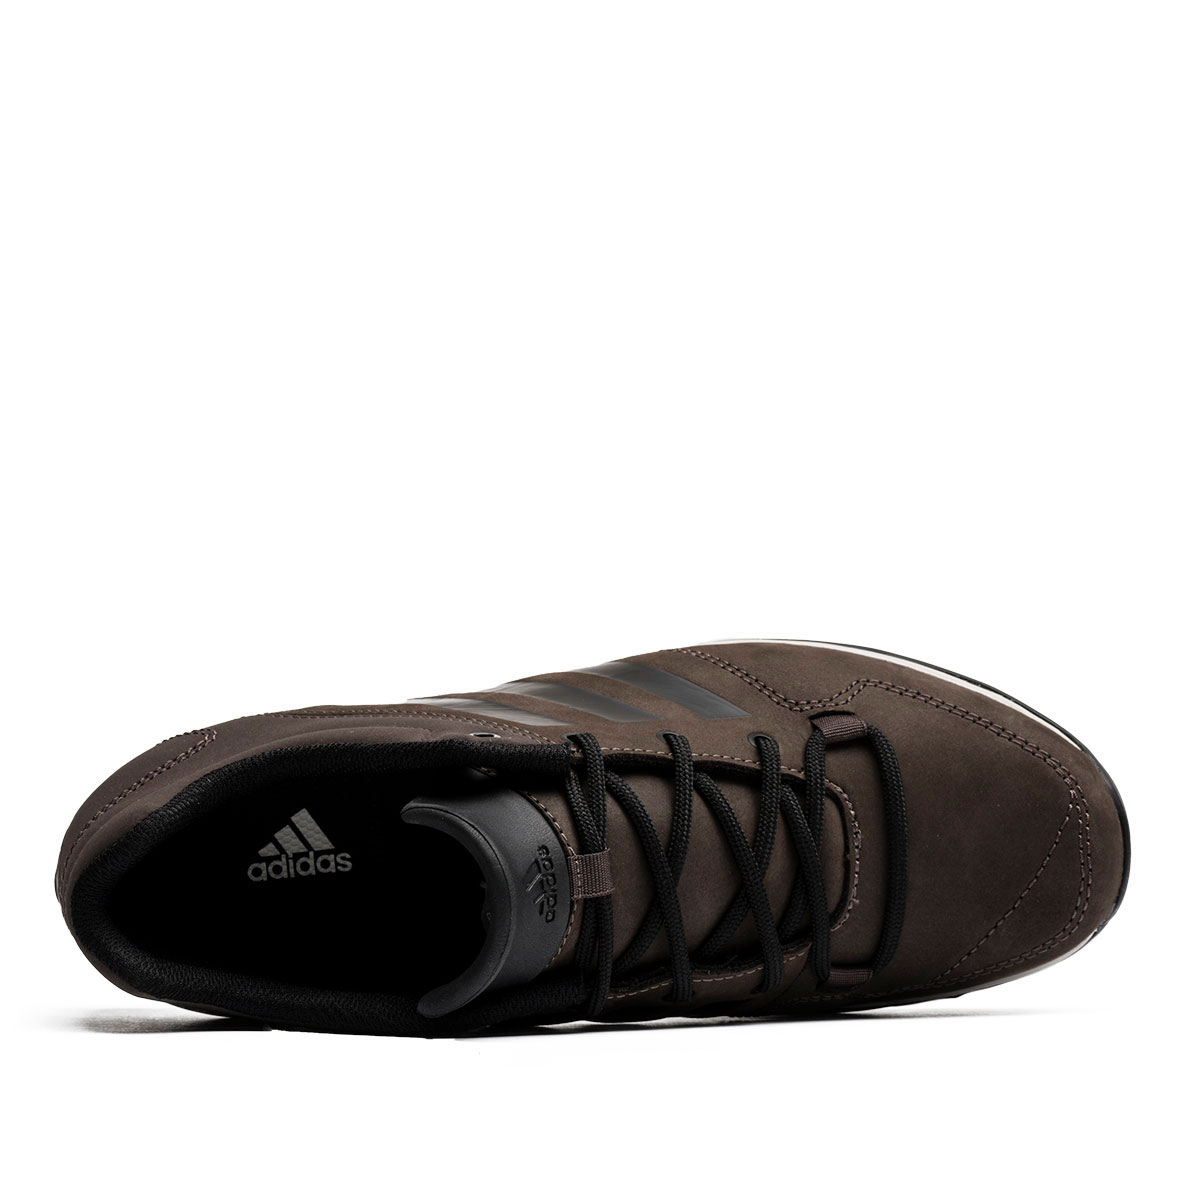 adidas Daroga Plus Leather  B27270